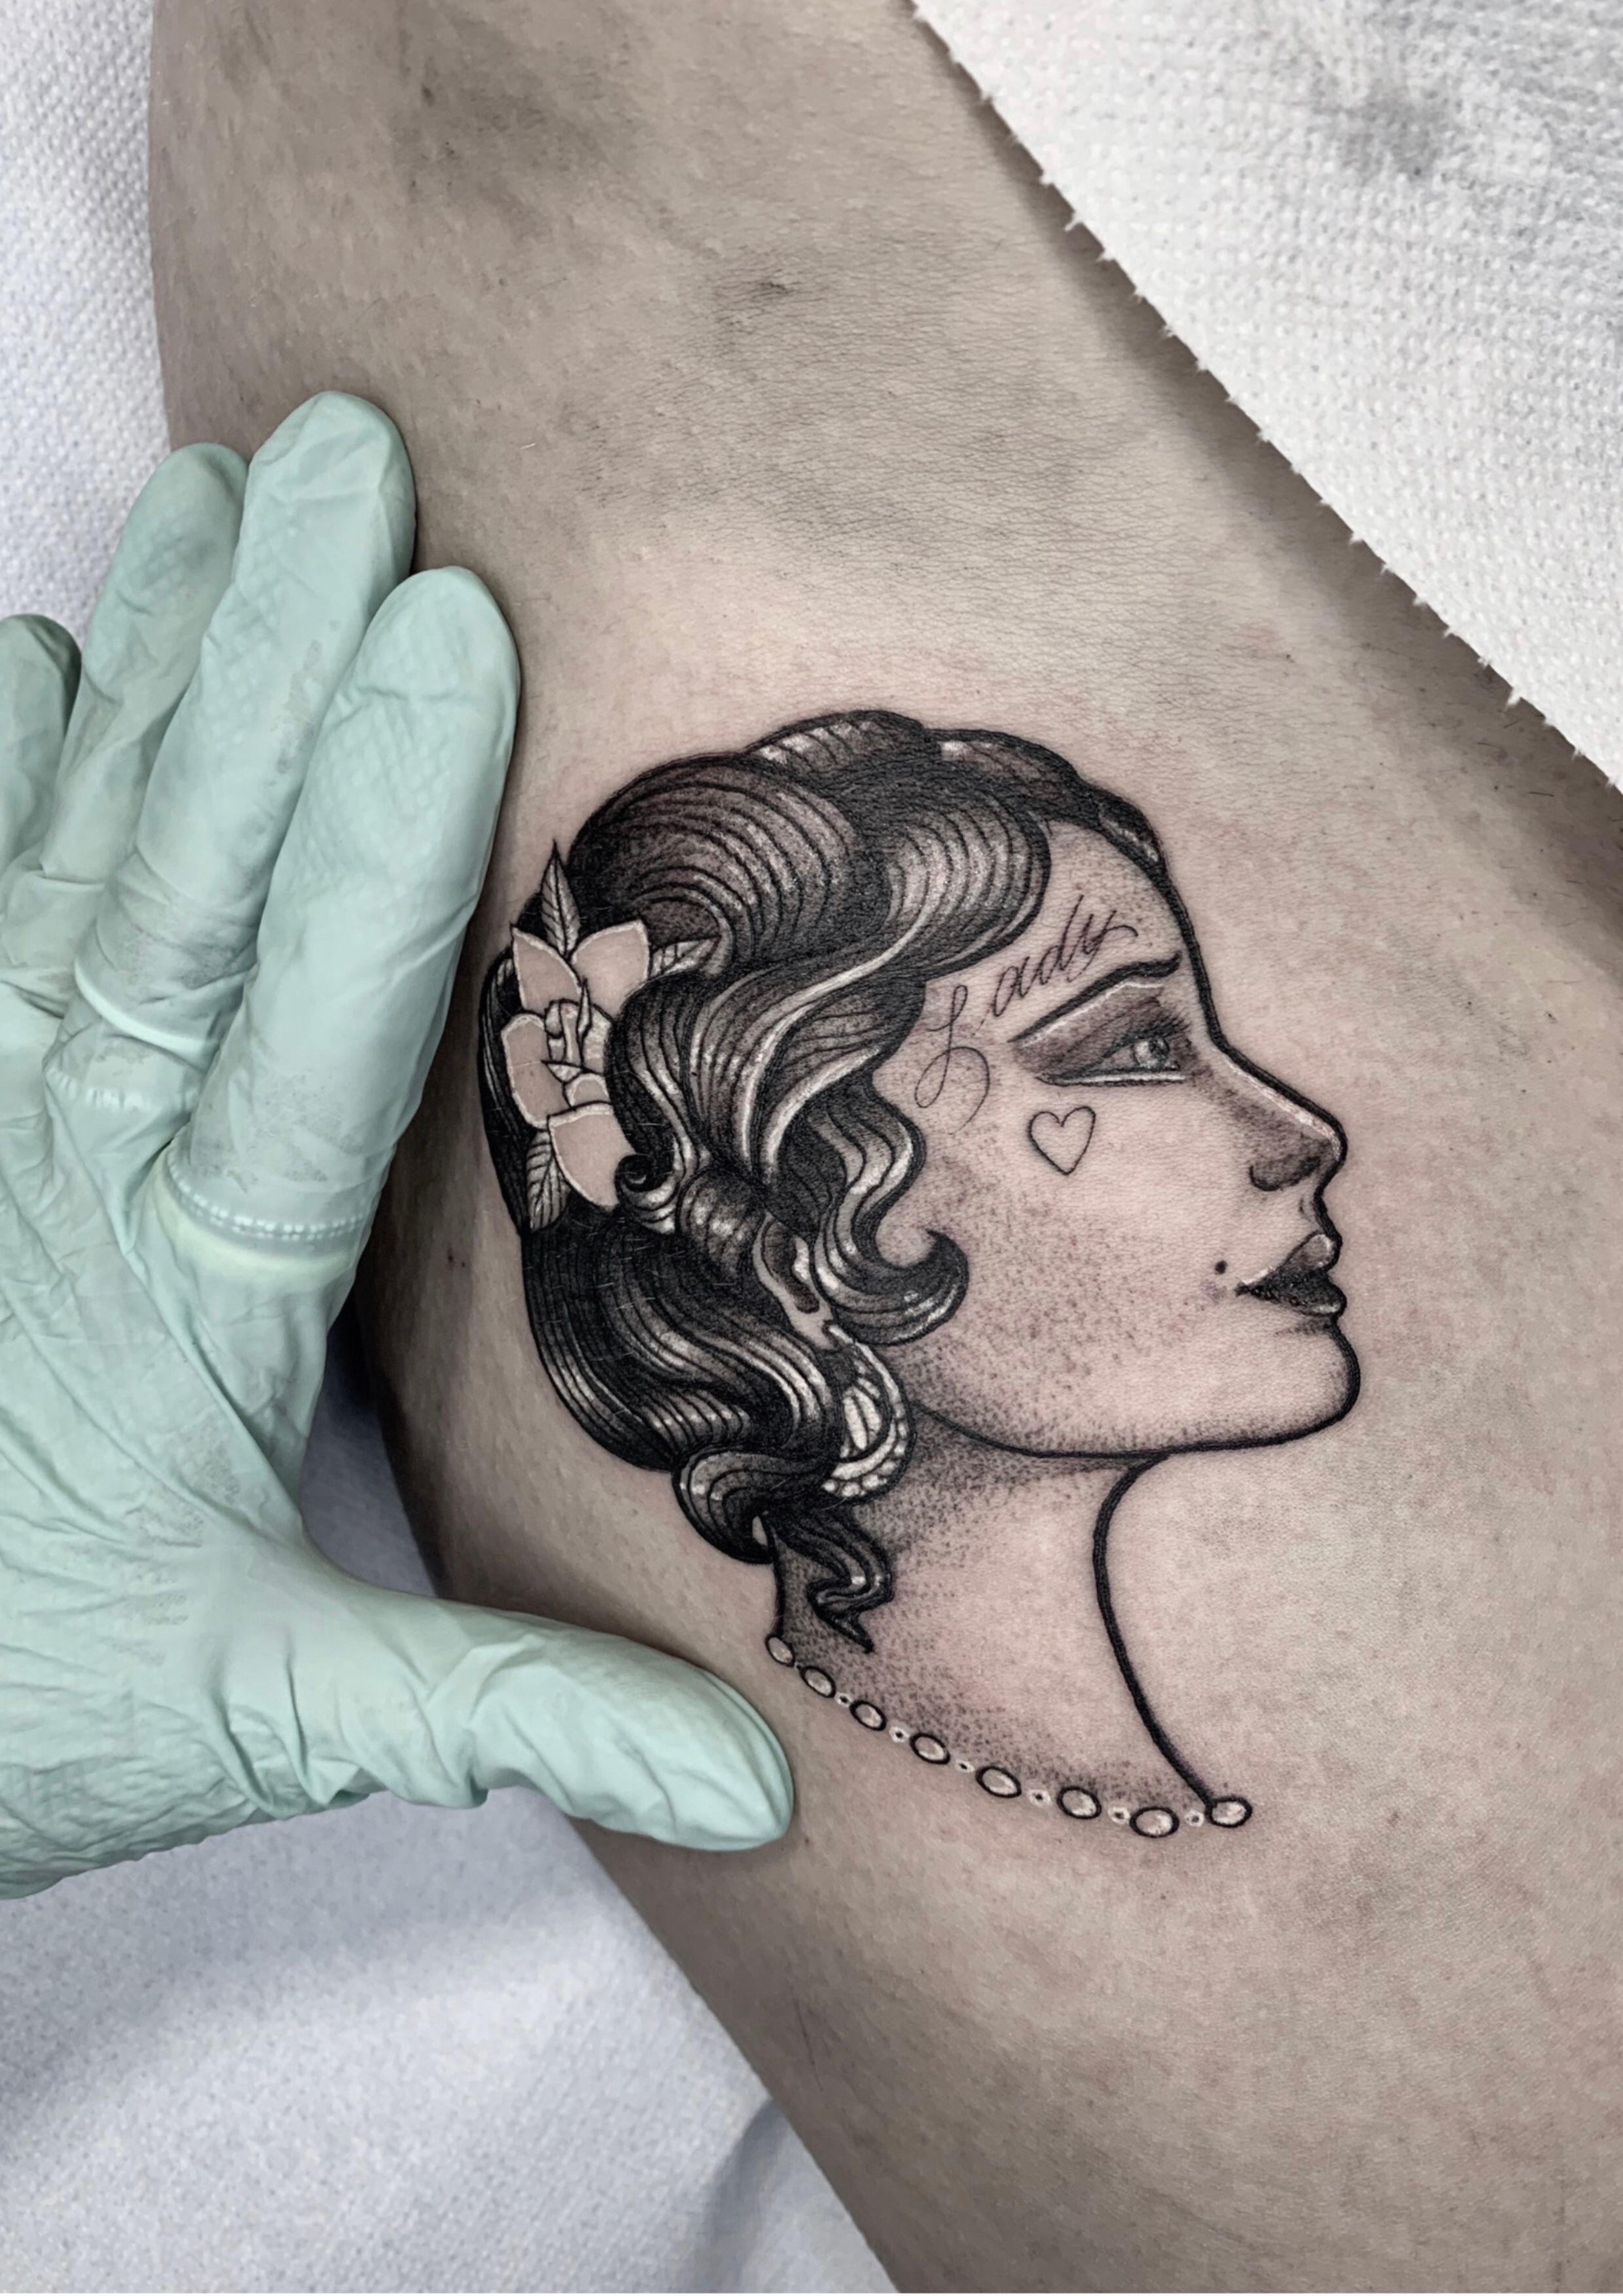 Lady head tattoo by Sara La Tia #SaraLaTia #lady #portrait #illustrative #chicano #neotraditional #heart #rose #script #pearl